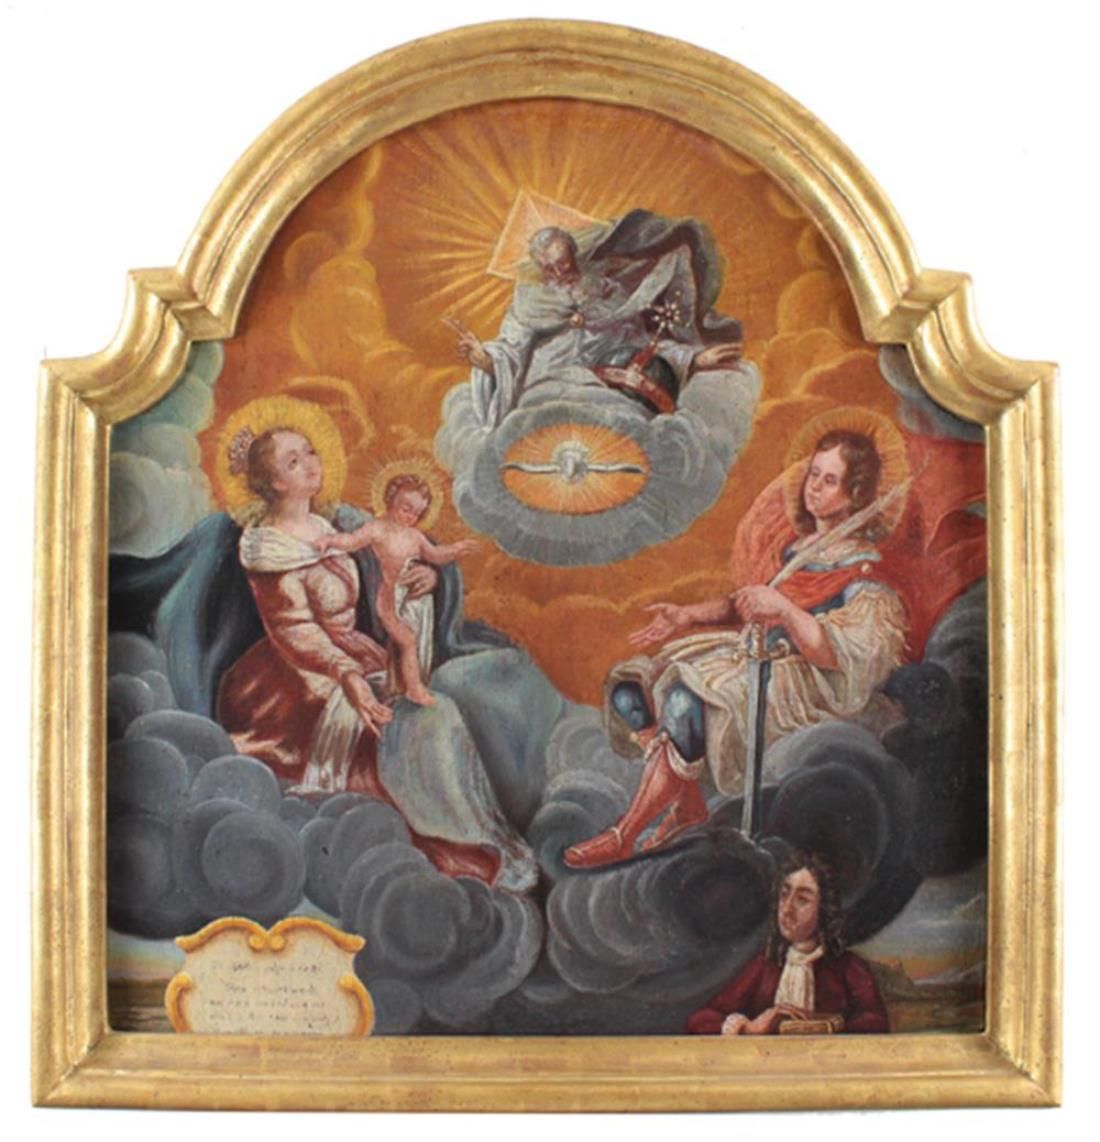 Anonym. 马利亚和基督儿童与父神和保罗一起漂浮在云端。布面油画。约54 x 49厘米。祭坛画在顶部圆润。有框。 D